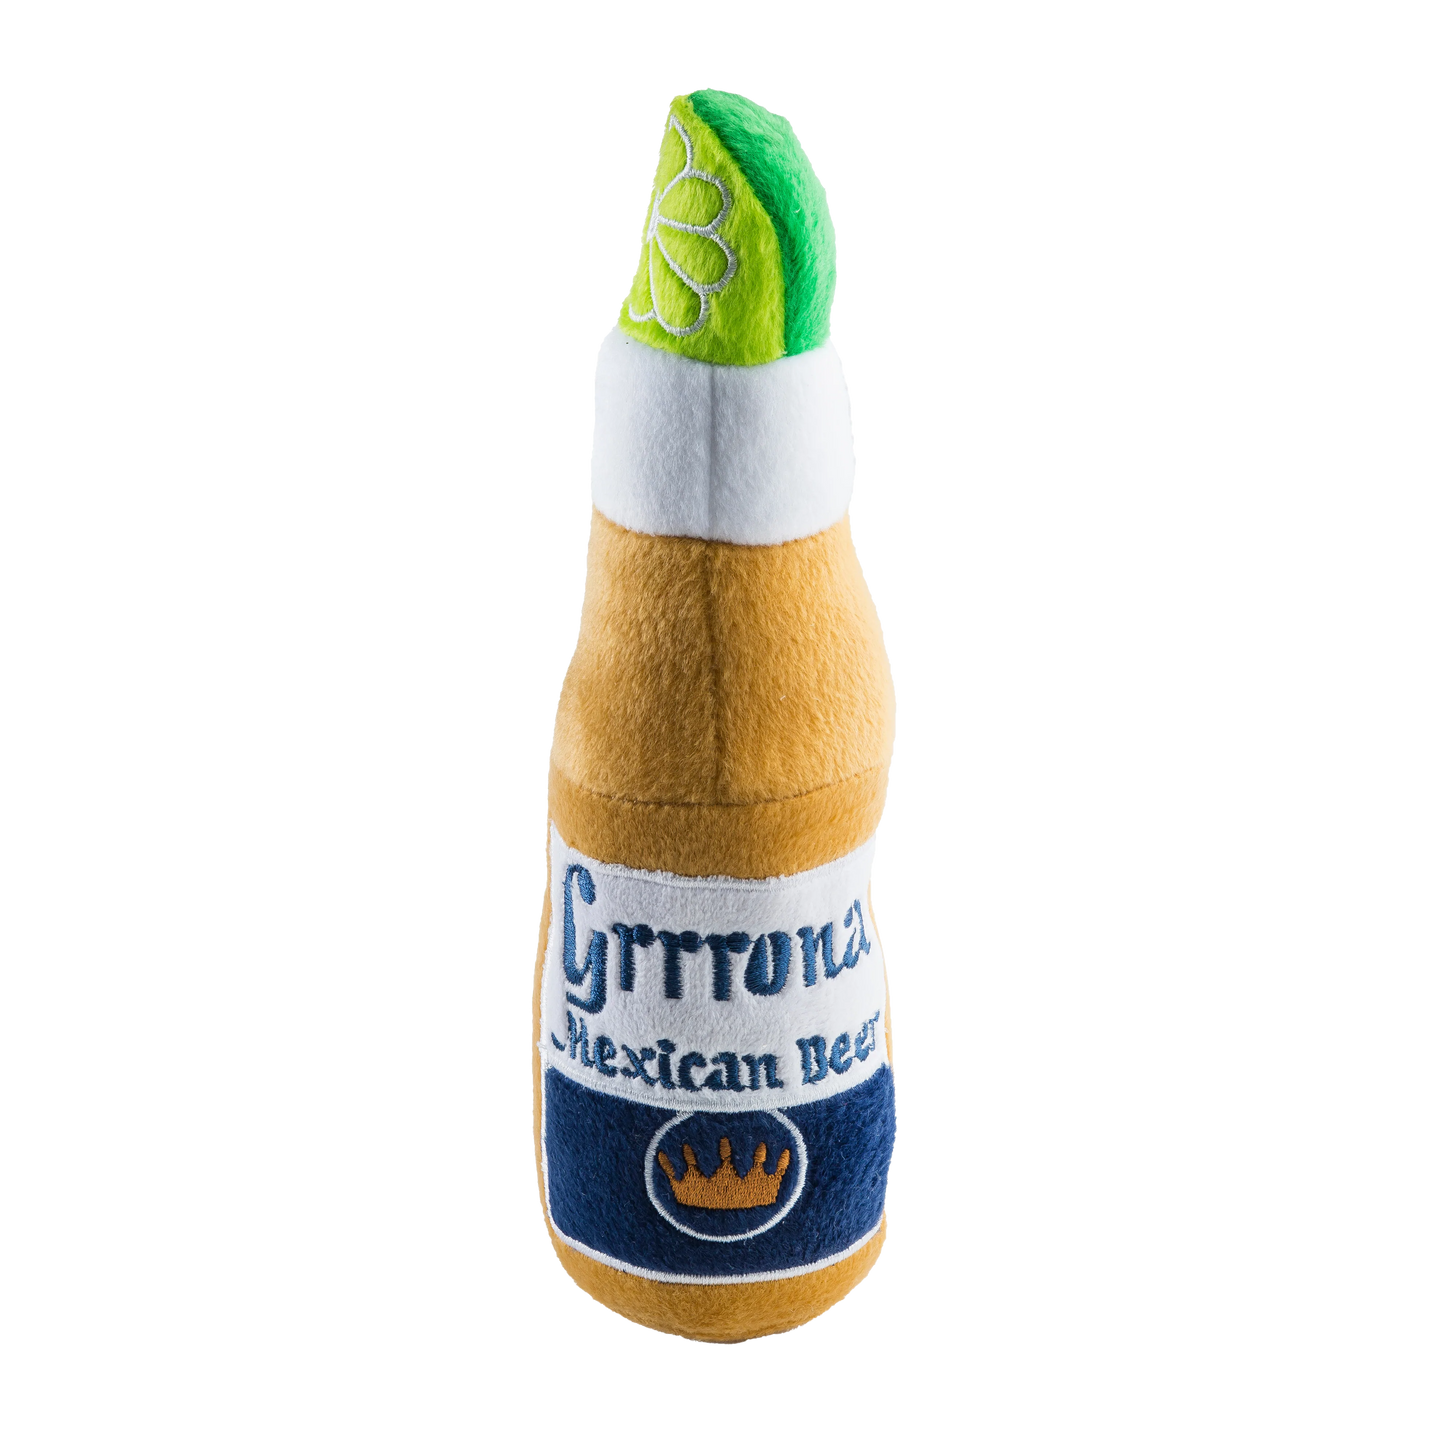 Grrrona Beer Bottle Dog Toy - Small